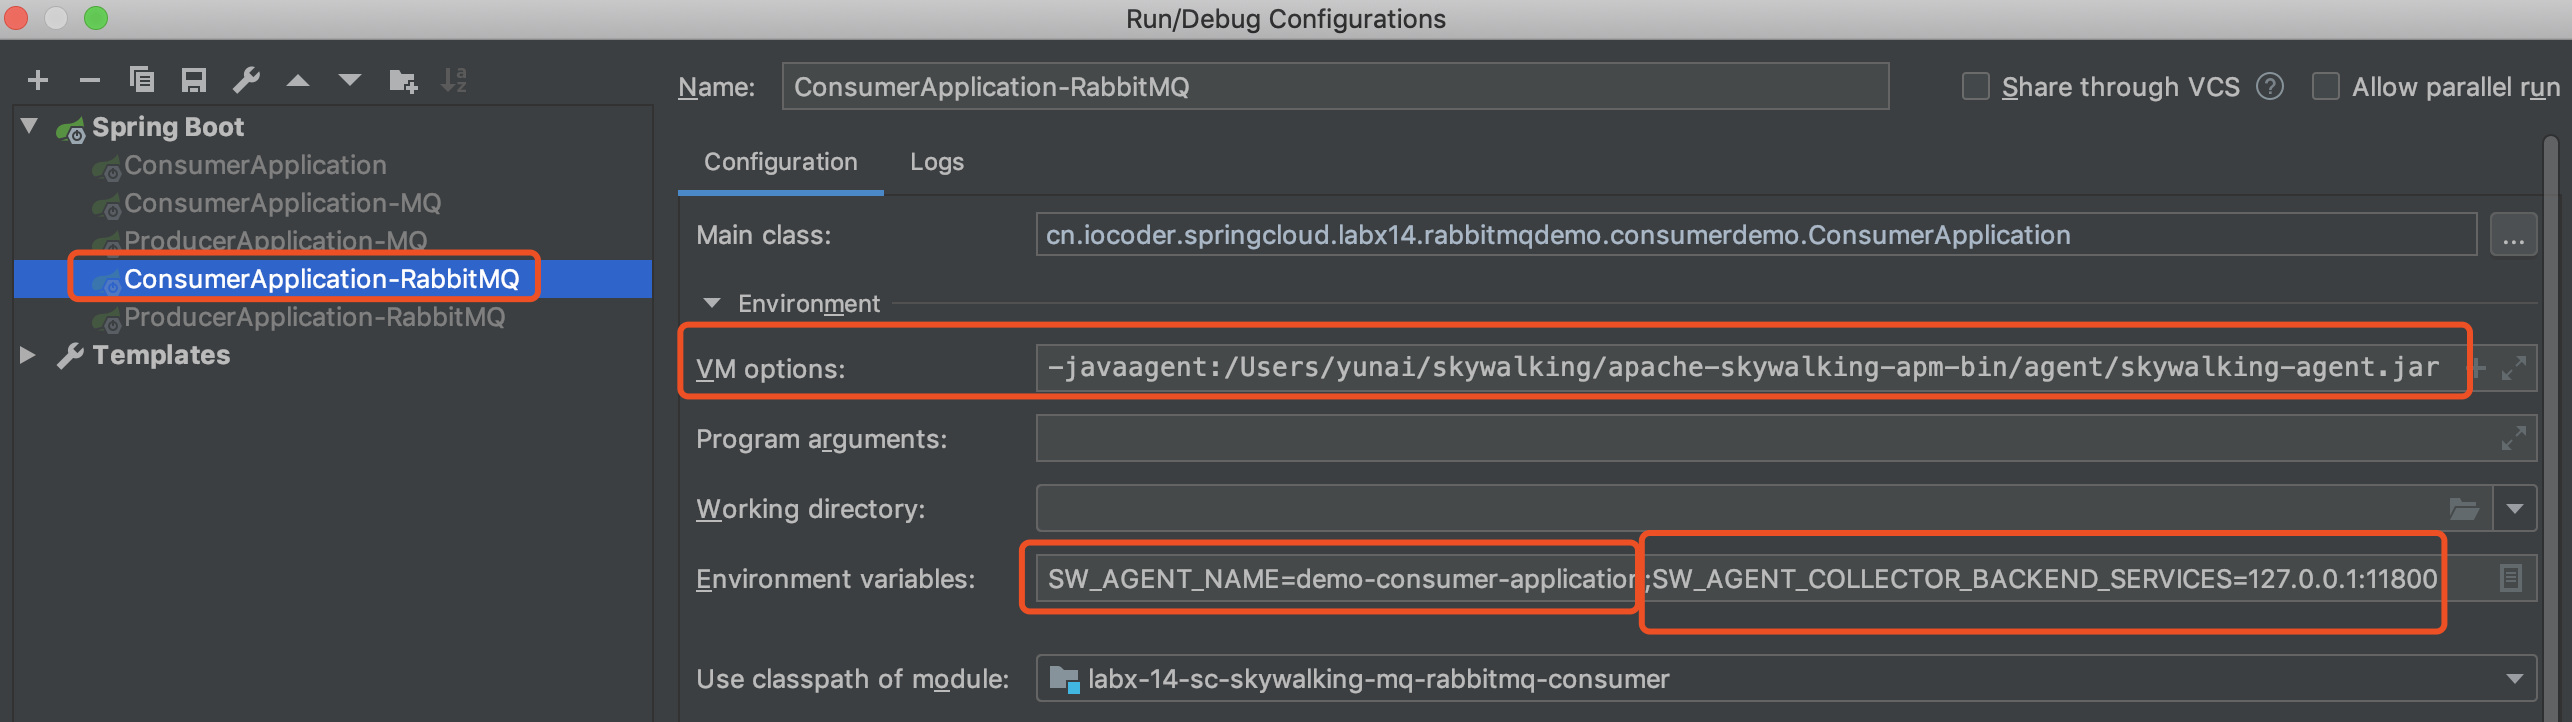 Run/Debug Configurations